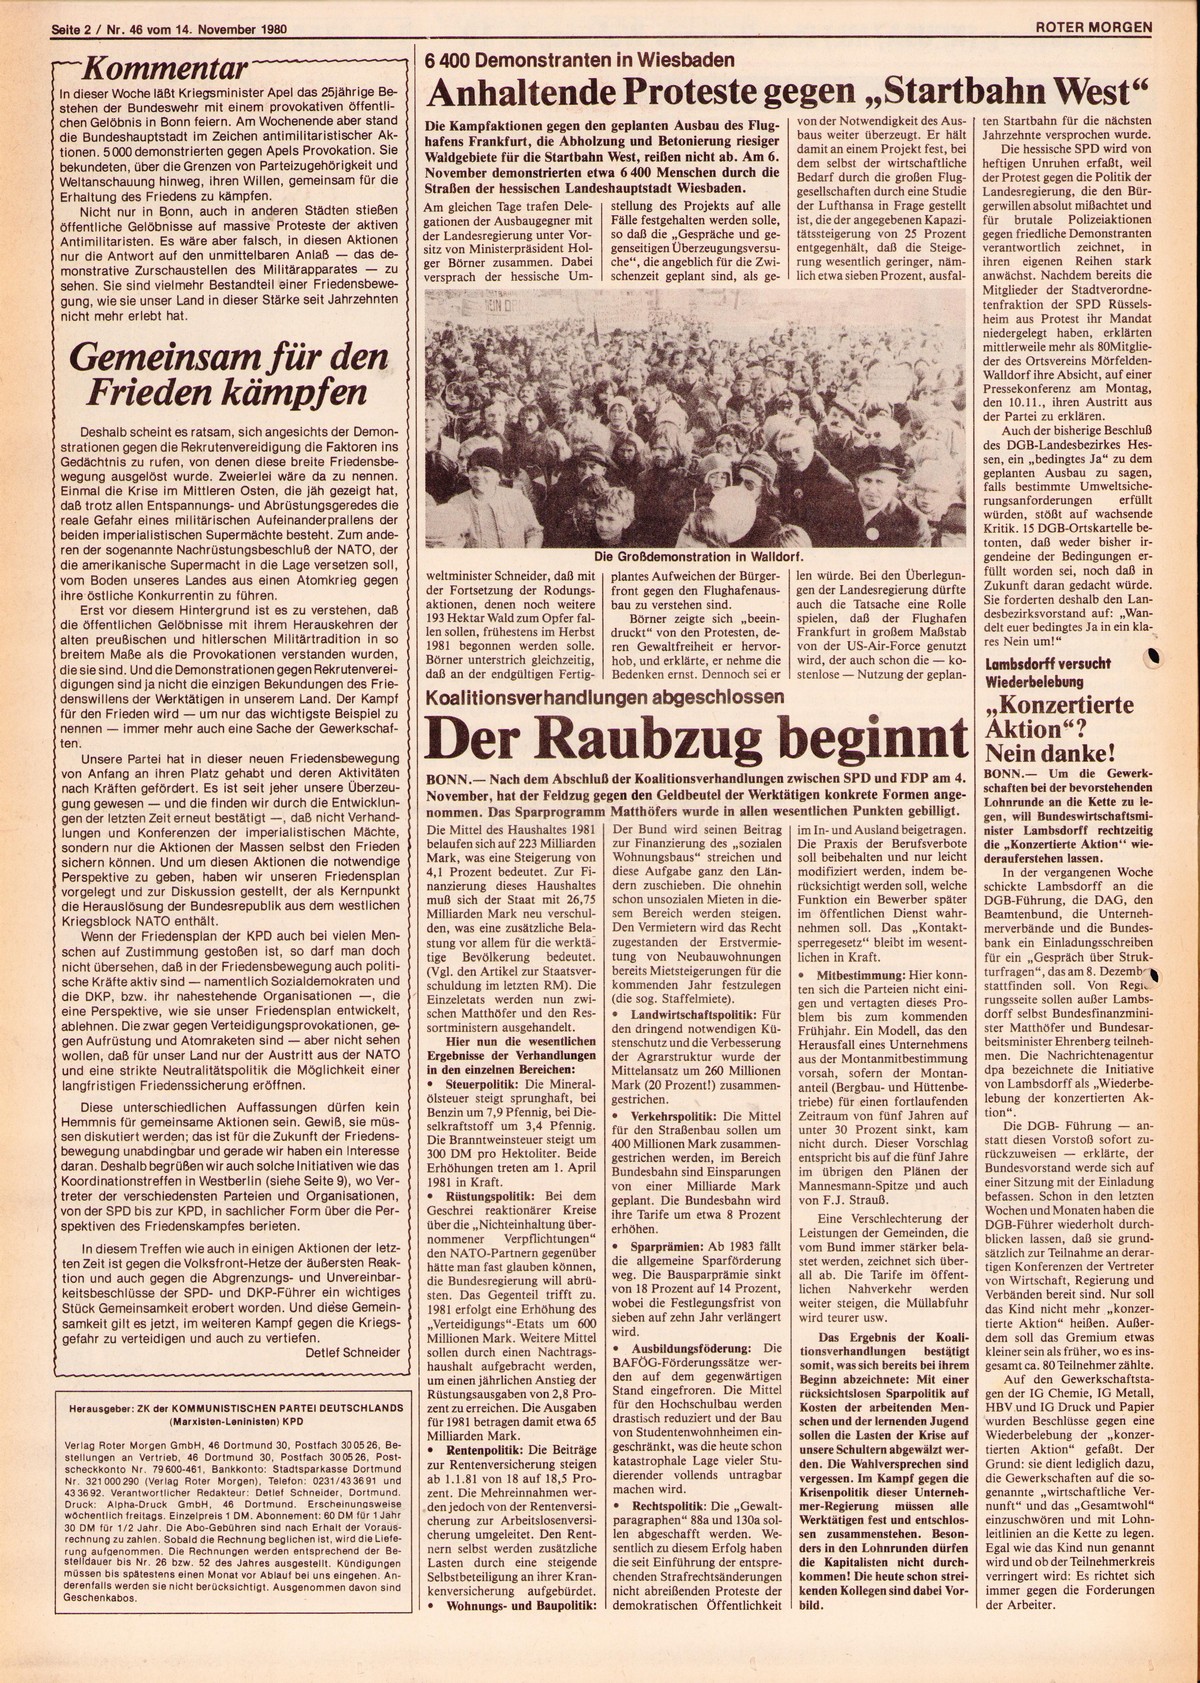 Roter Morgen, 14. Jg., 14. November 1980, Nr. 46, Seite 2